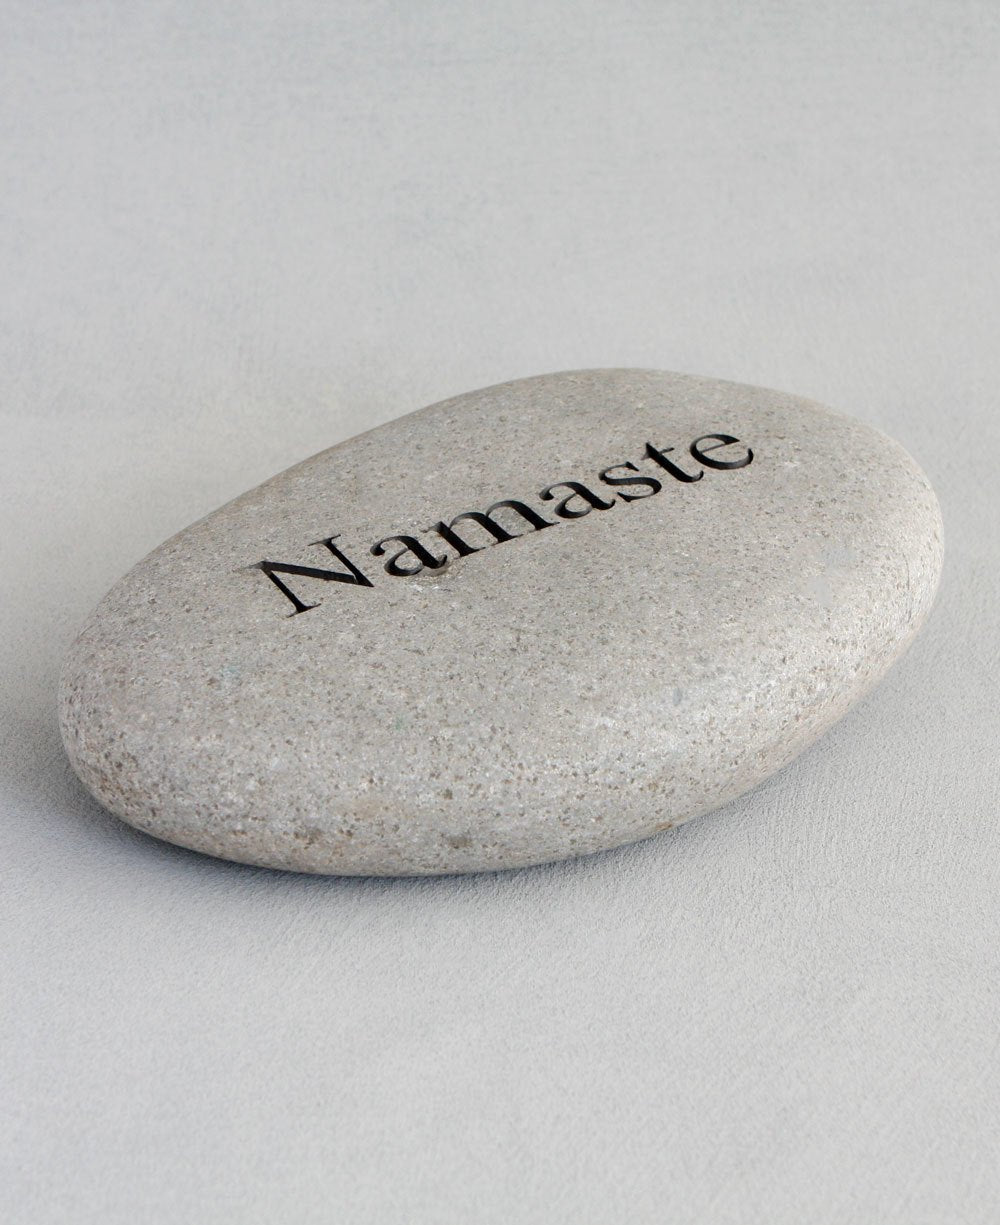 Inspirational Namaste Garden Zen Rock - Home